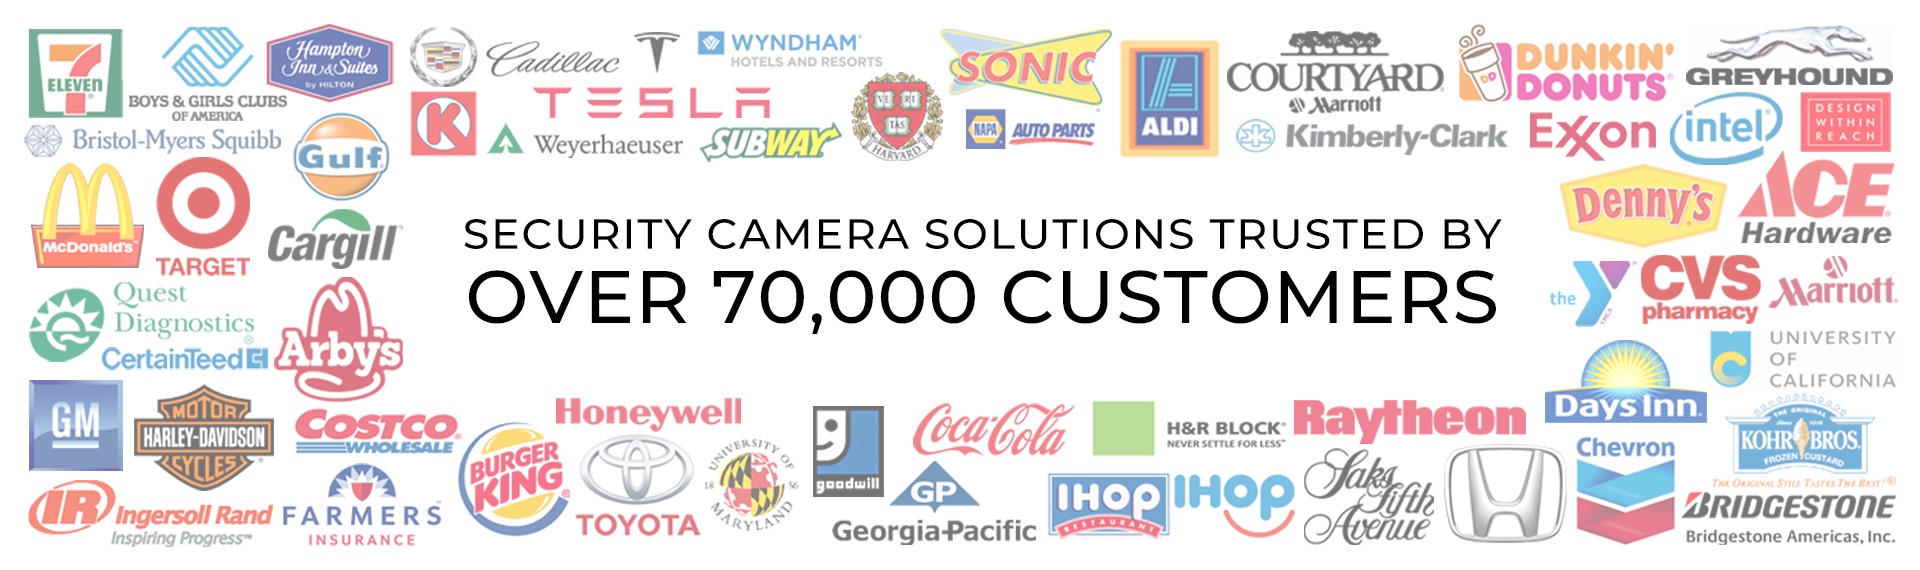 70K Security Cameras Sold